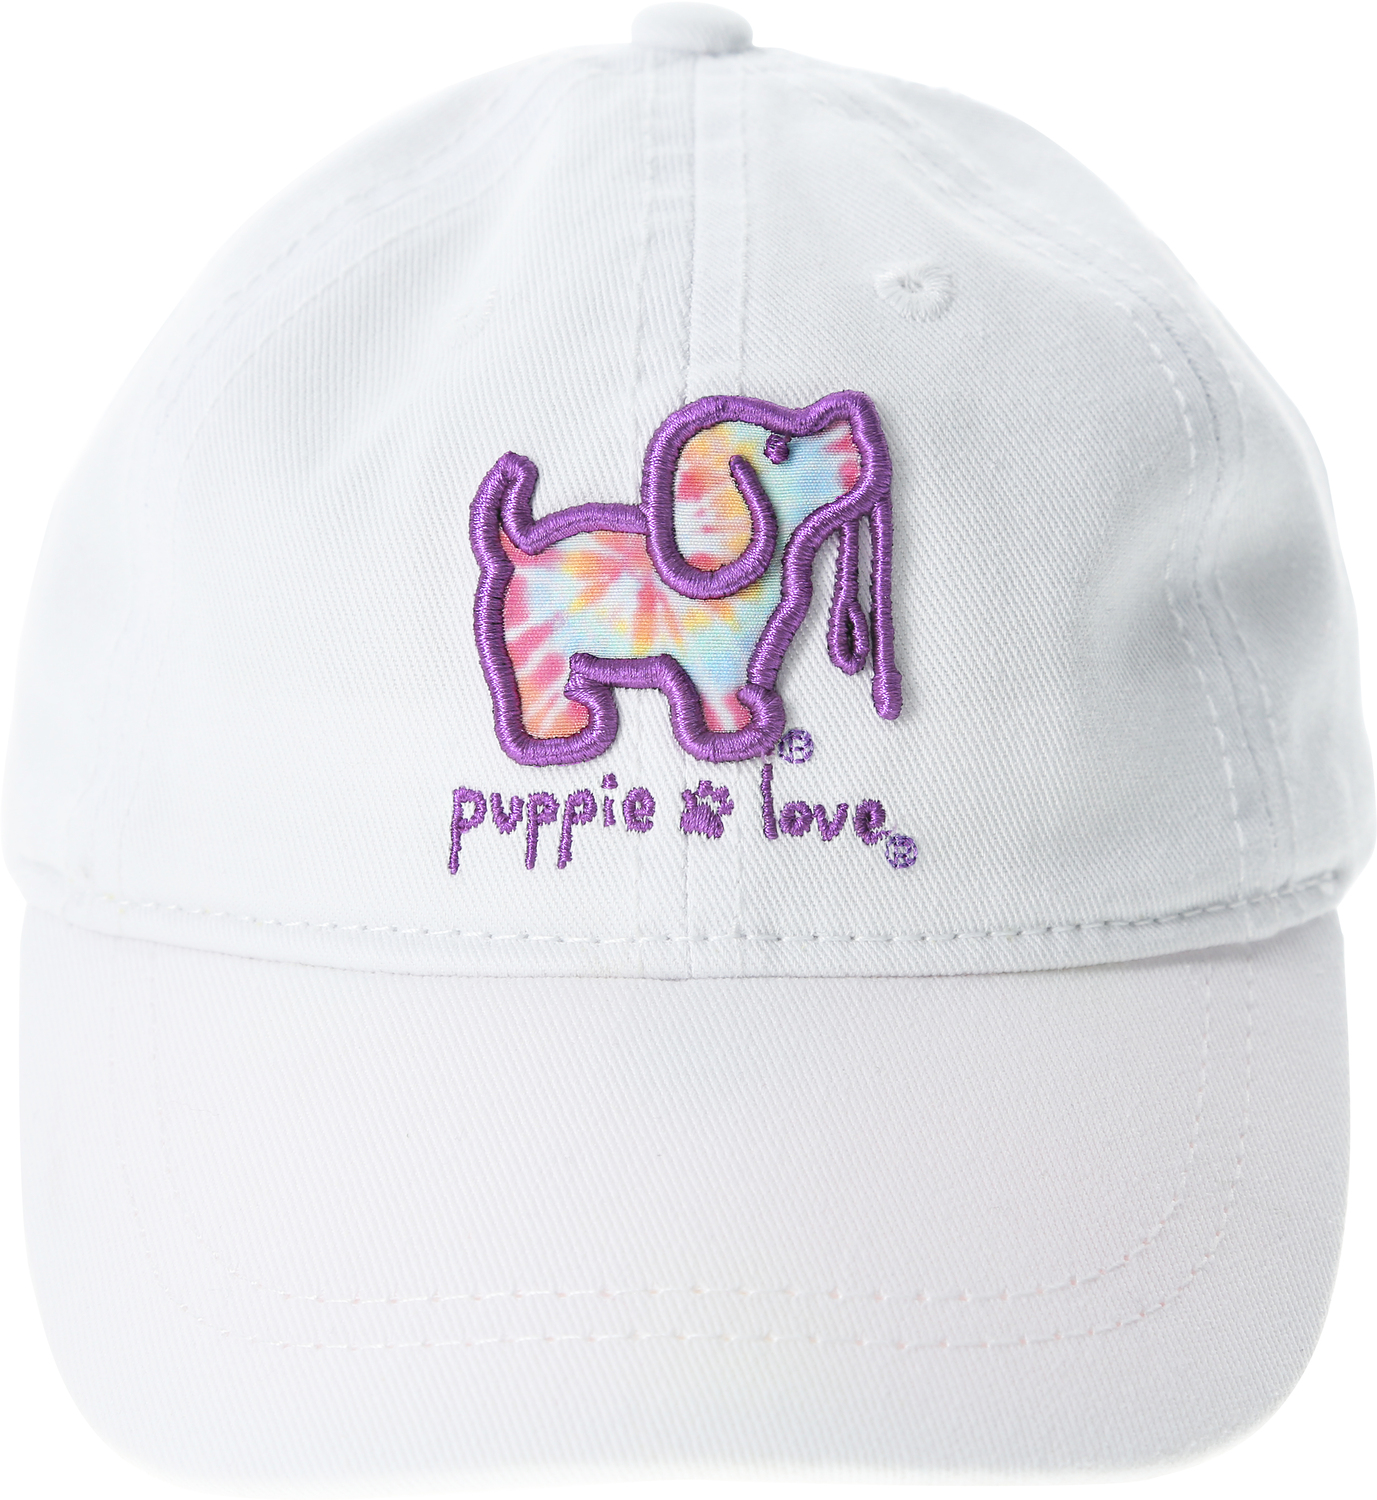 Tie Dye by Puppie Love - Tie Dye - 18" to 19" Adjustable Baby Hat
(0-12 Months)